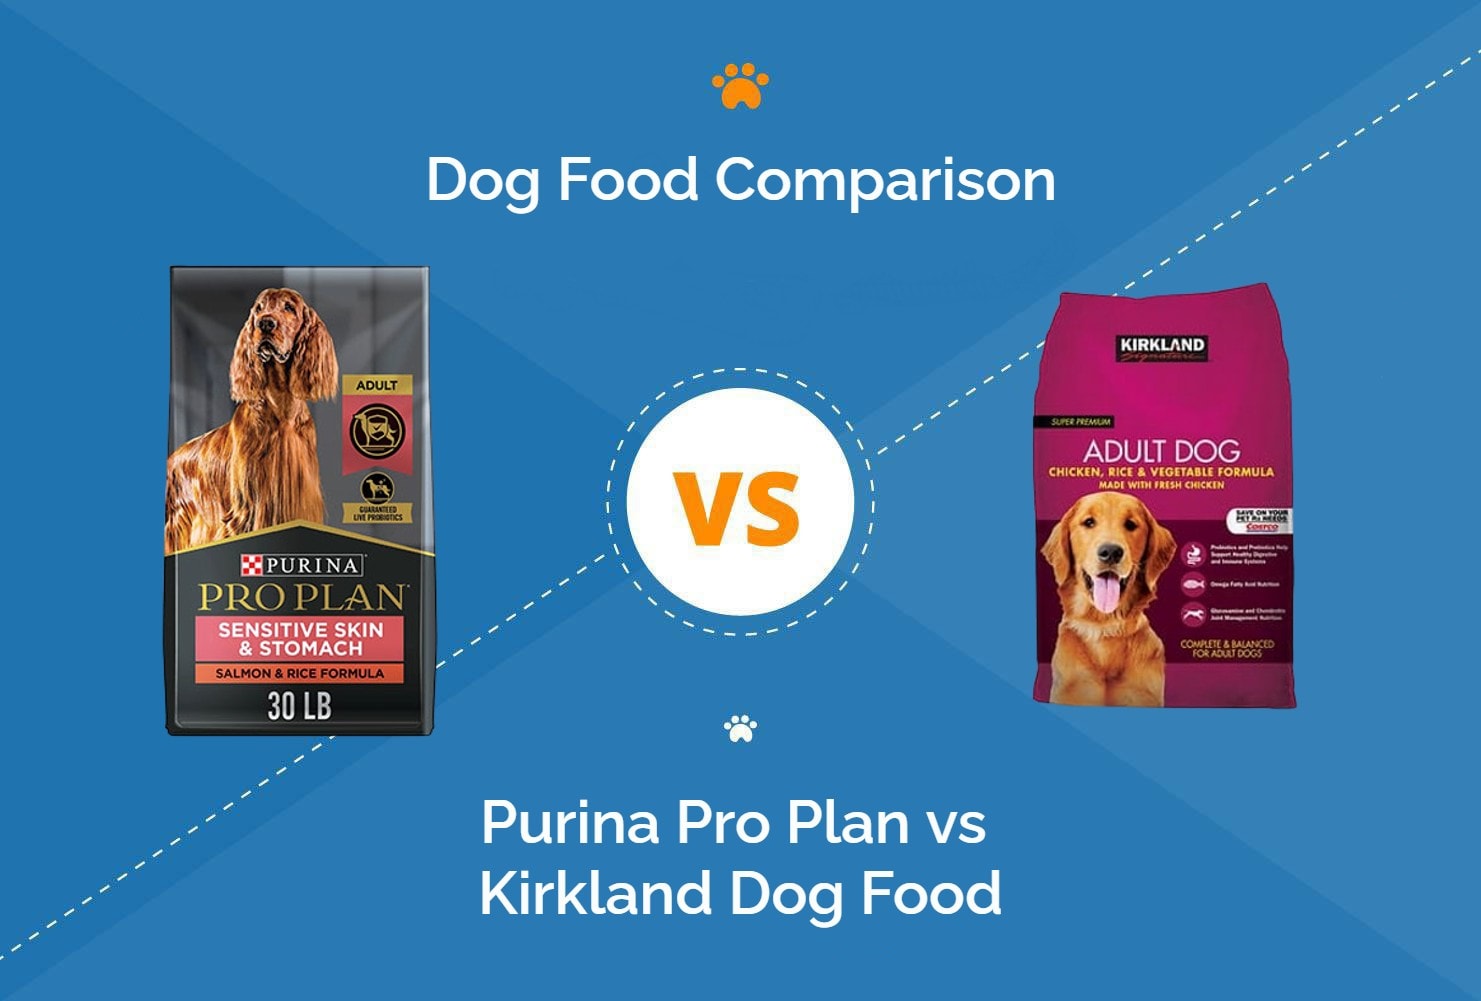 Purina Pro Plan vs Kirkland Dog Food